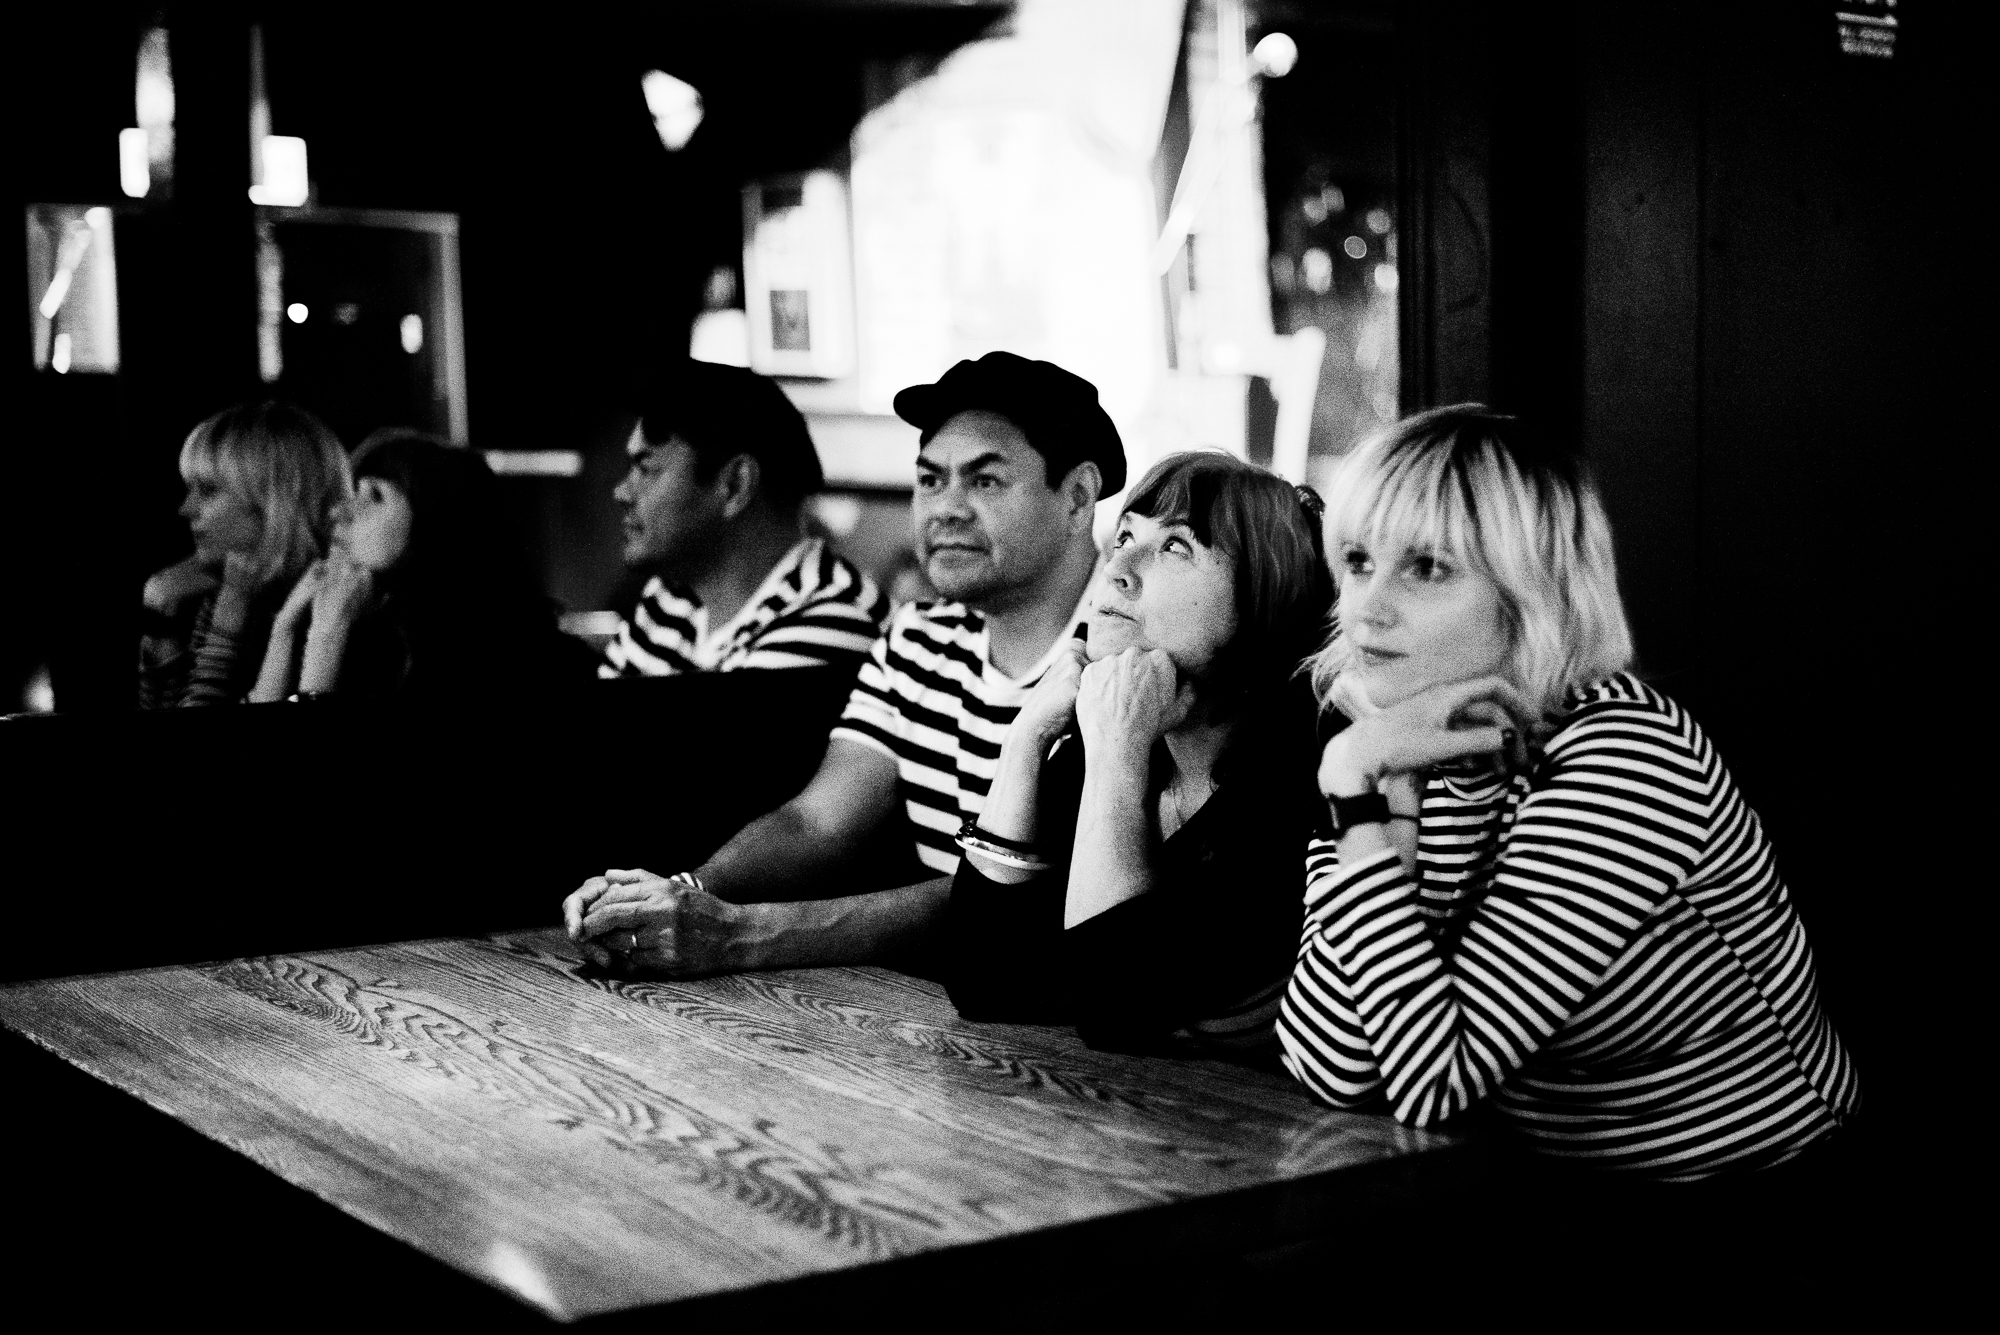 Bay area indie pop trio Artsick announces debut LP for Slumberland, shares “Despise” video